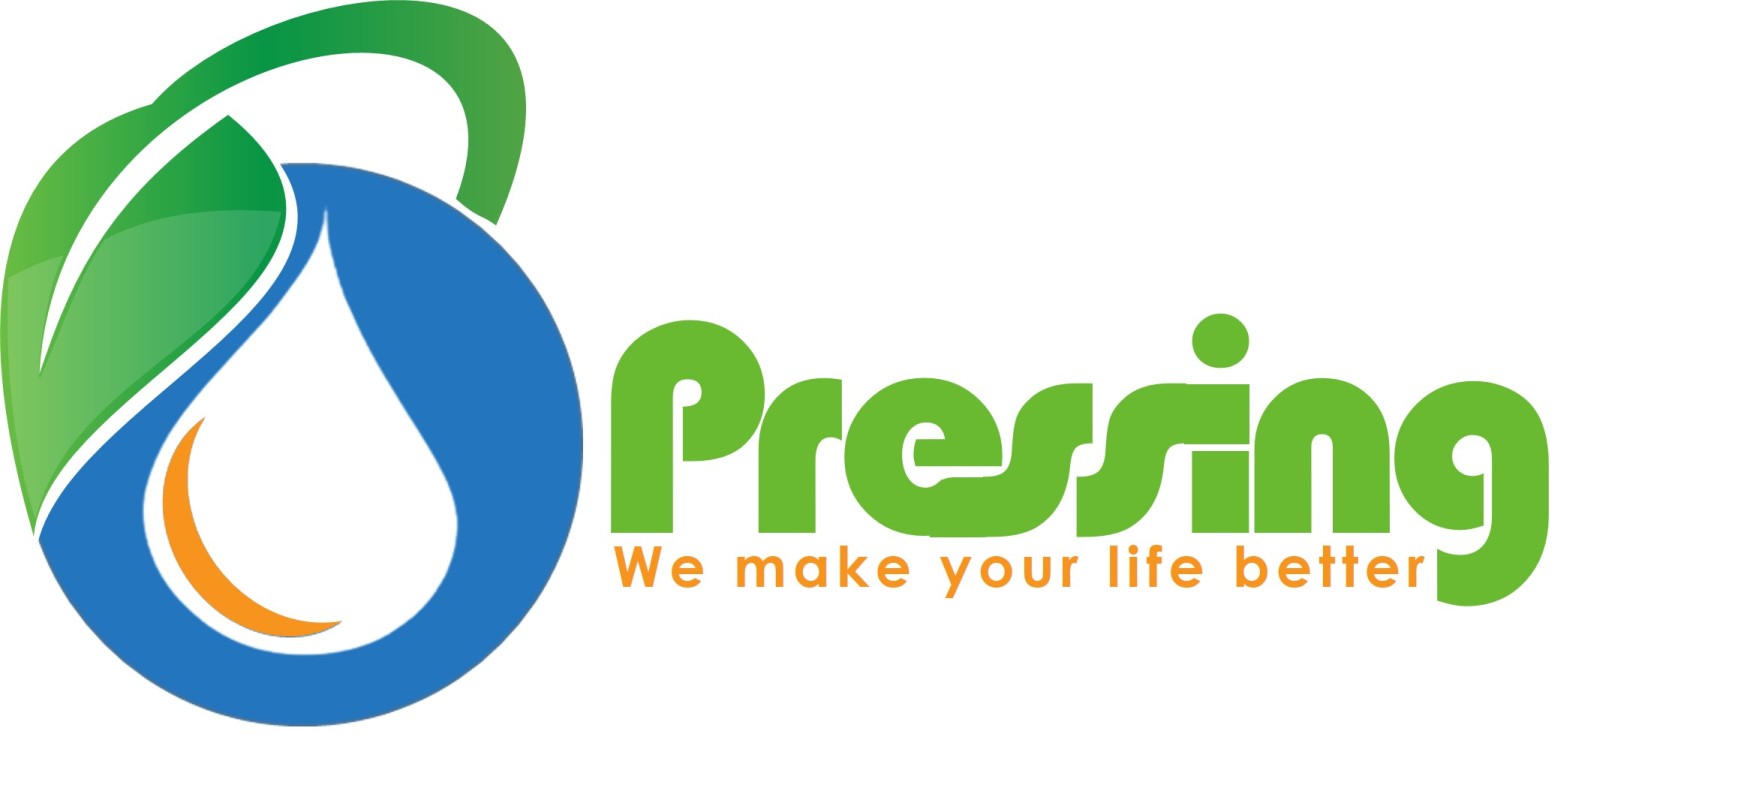 Ô Pressing Company Logo